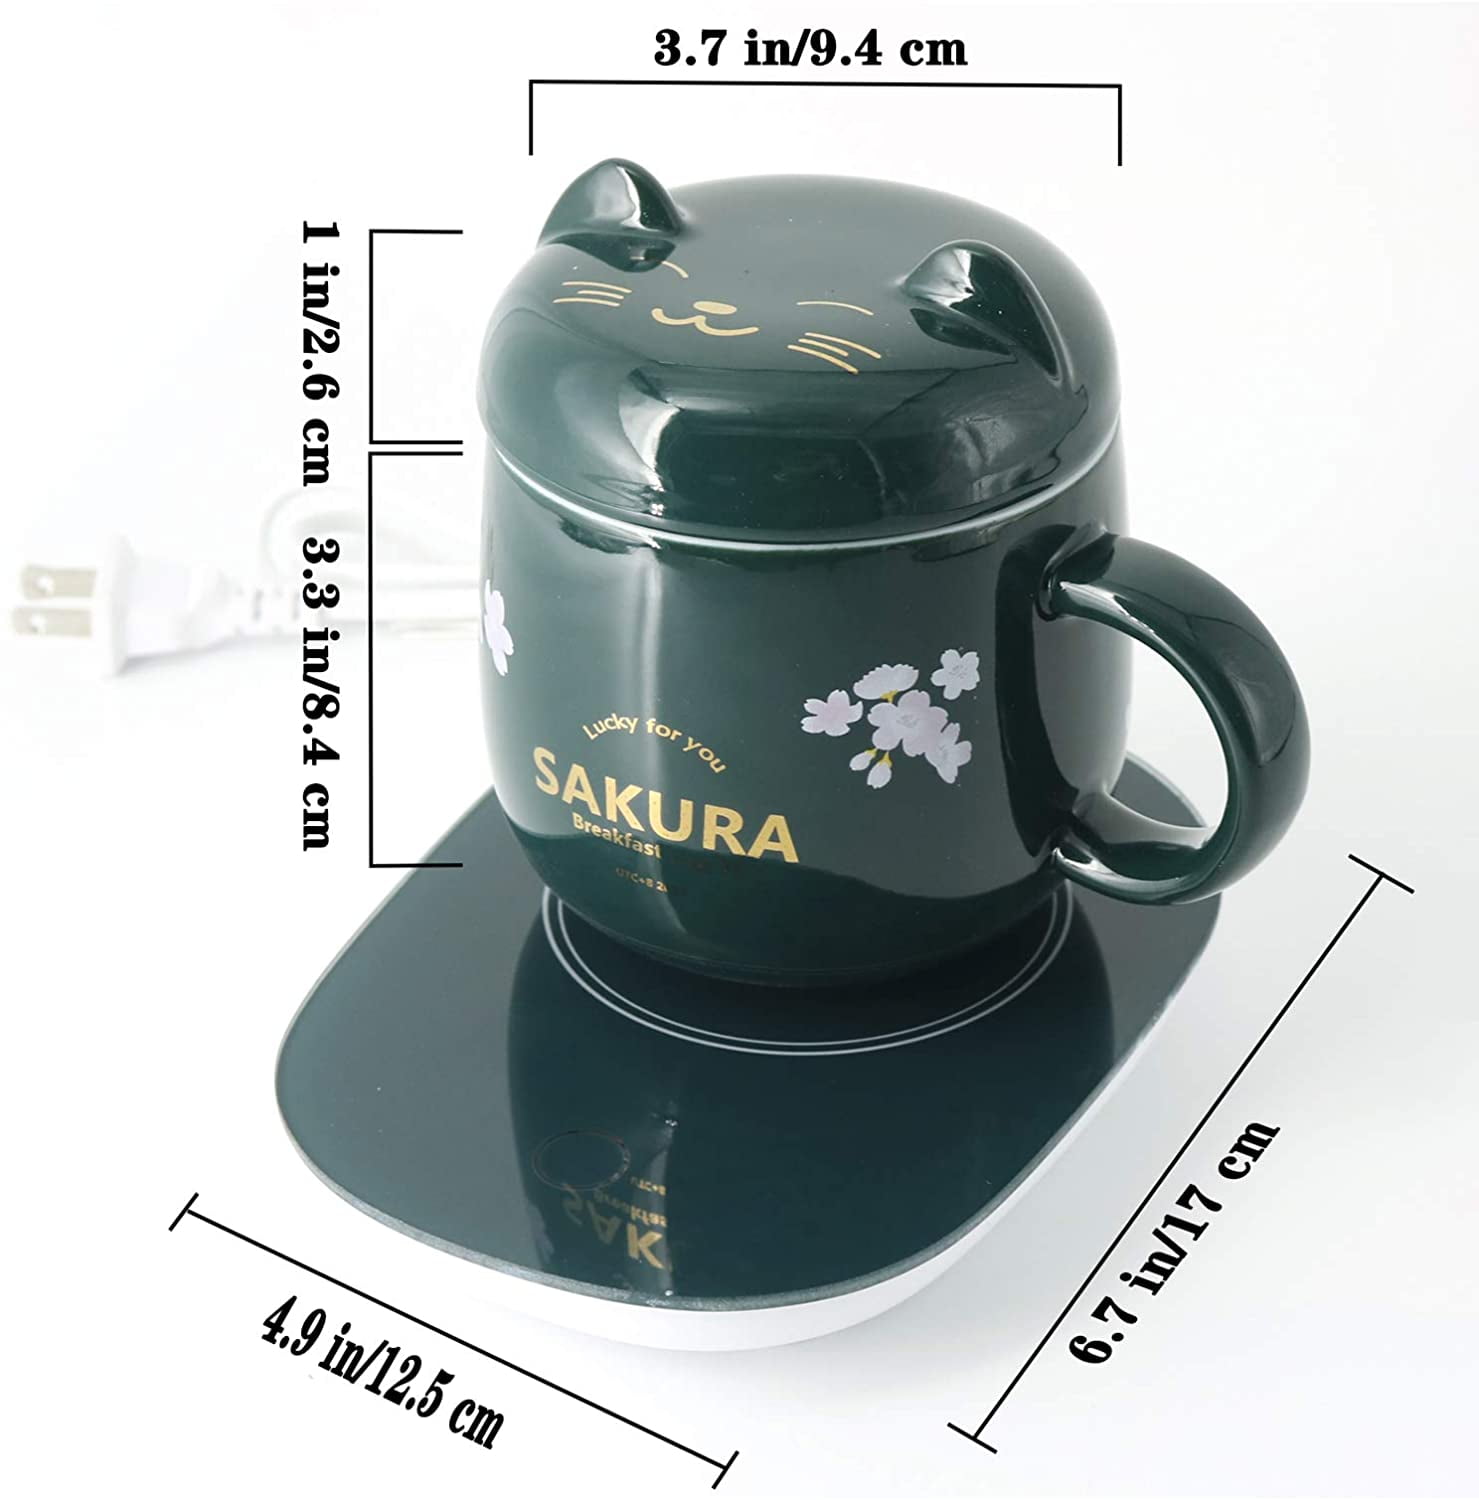 SPRING PARK Coffee Mug Warmer, Smart Cup Warmer Beverage Warmer